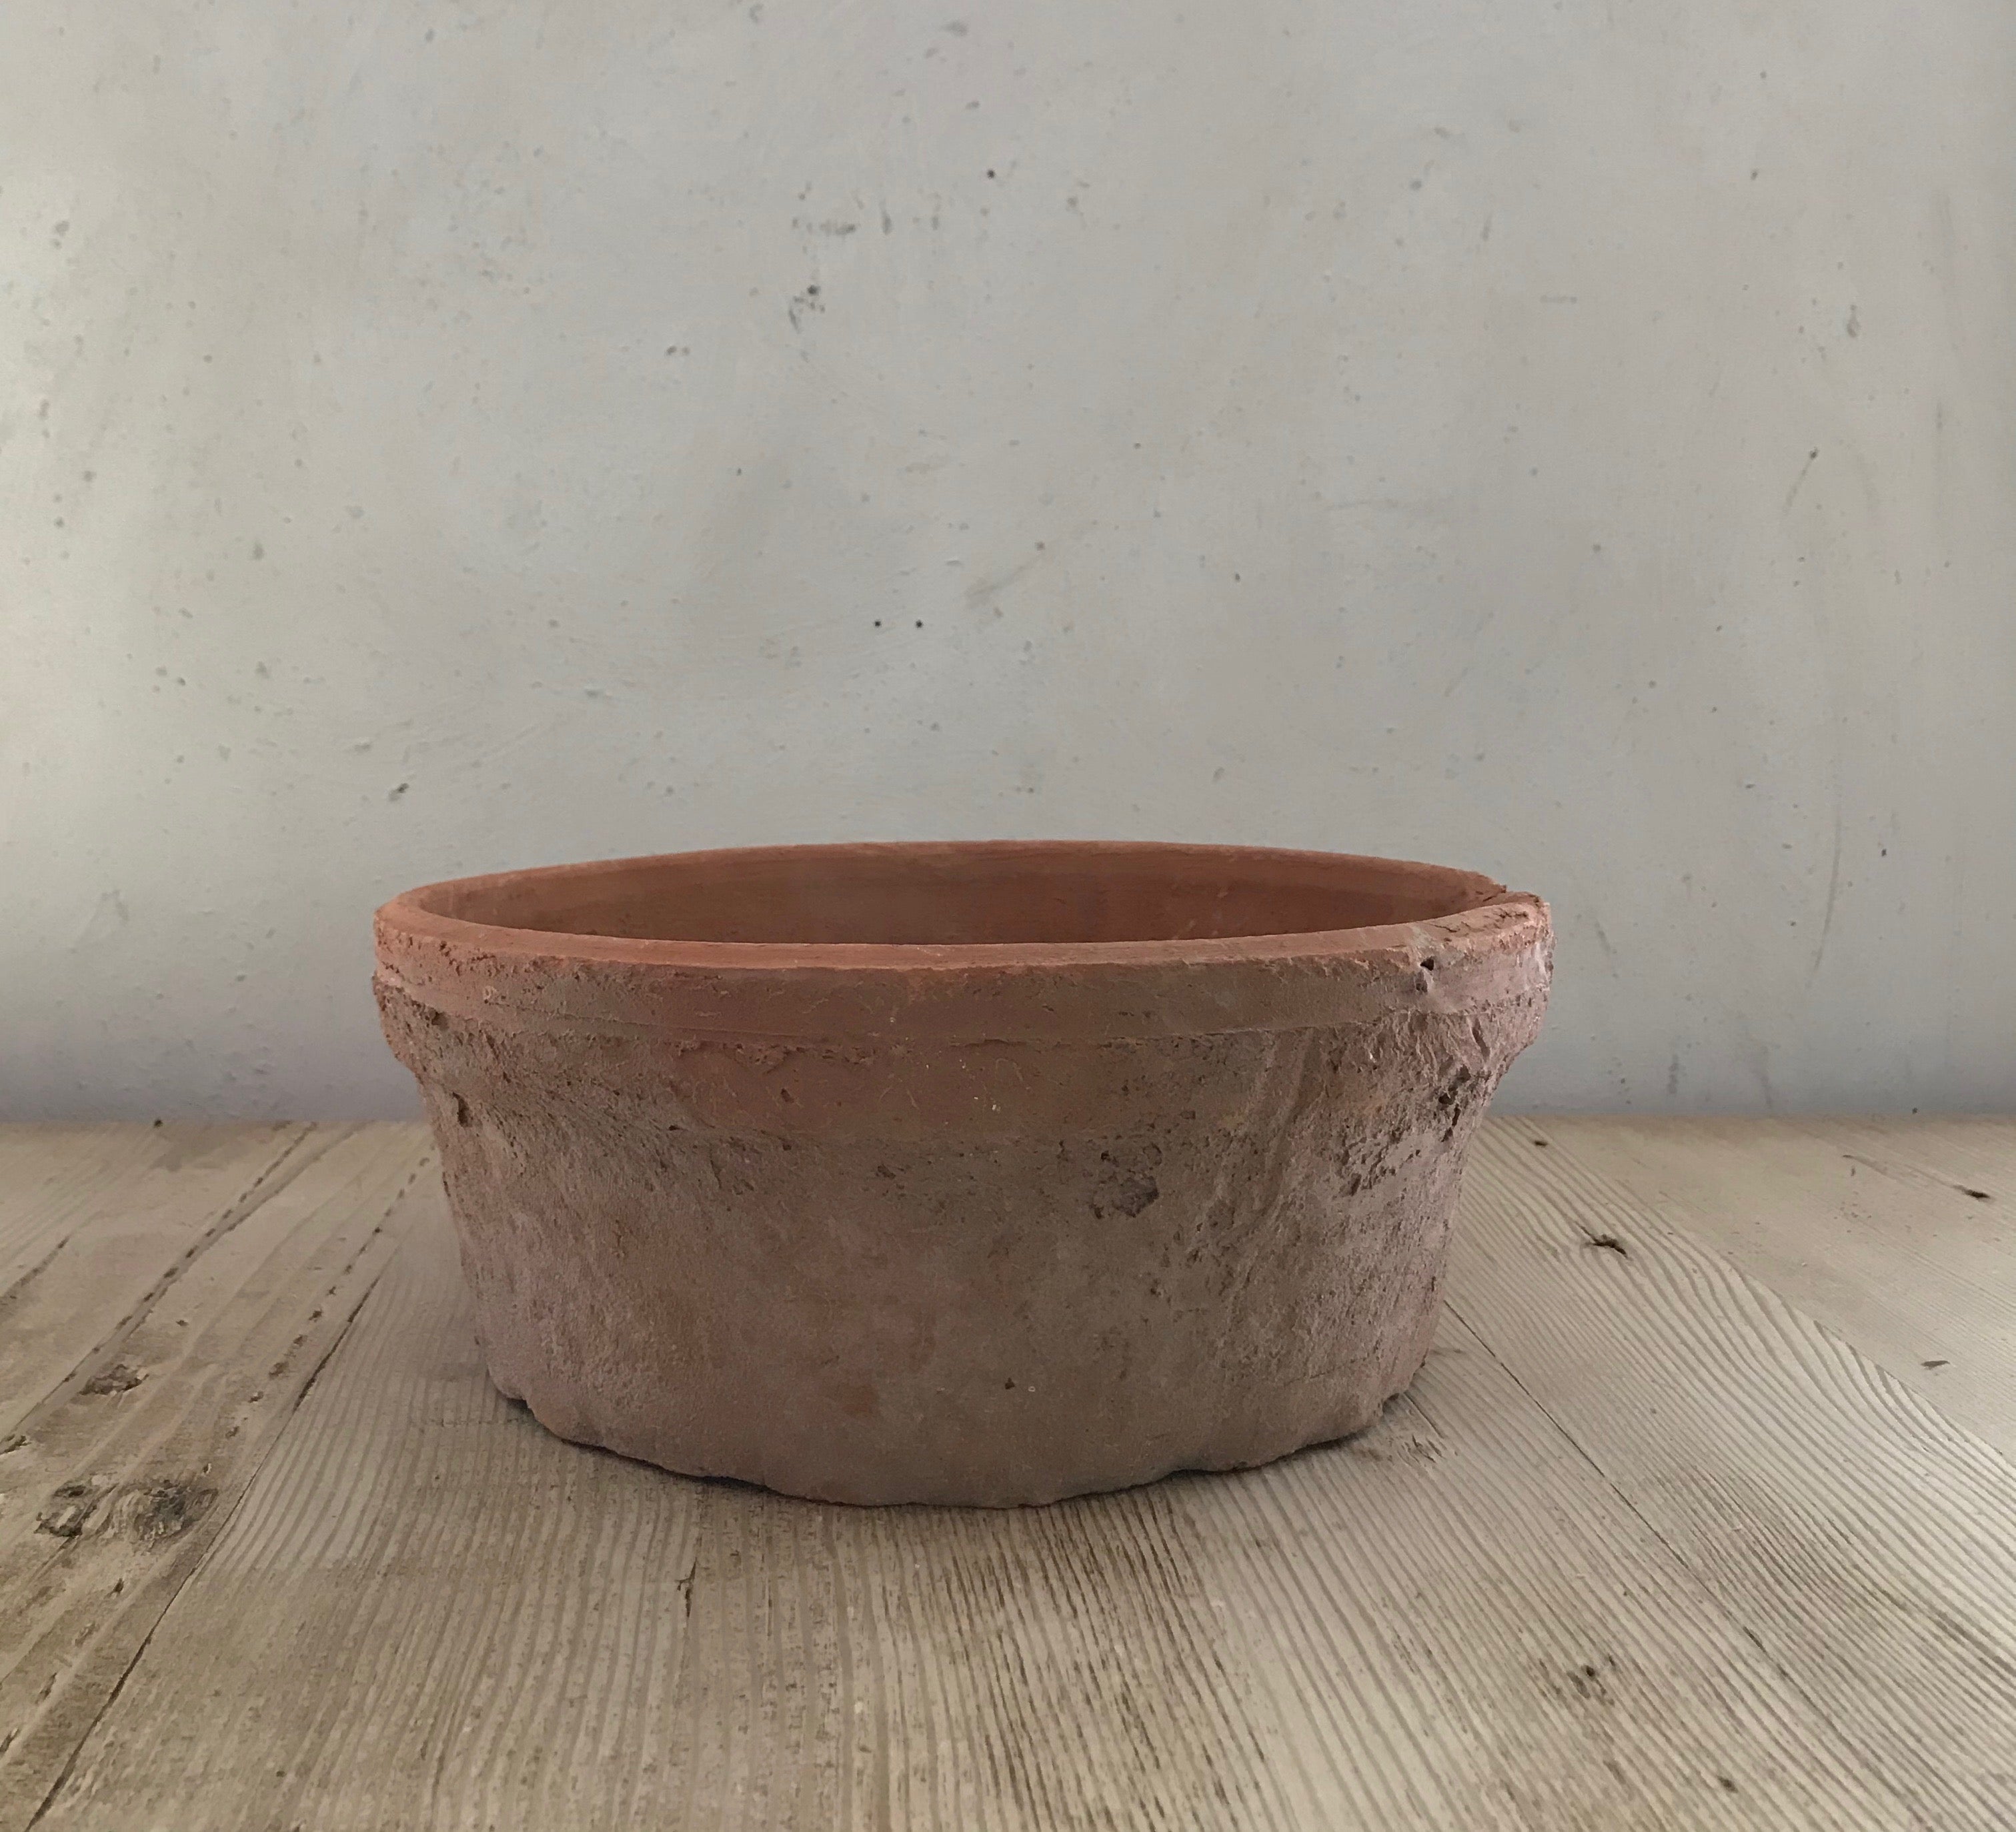 12 Standard Terra Cotta Clay Pot